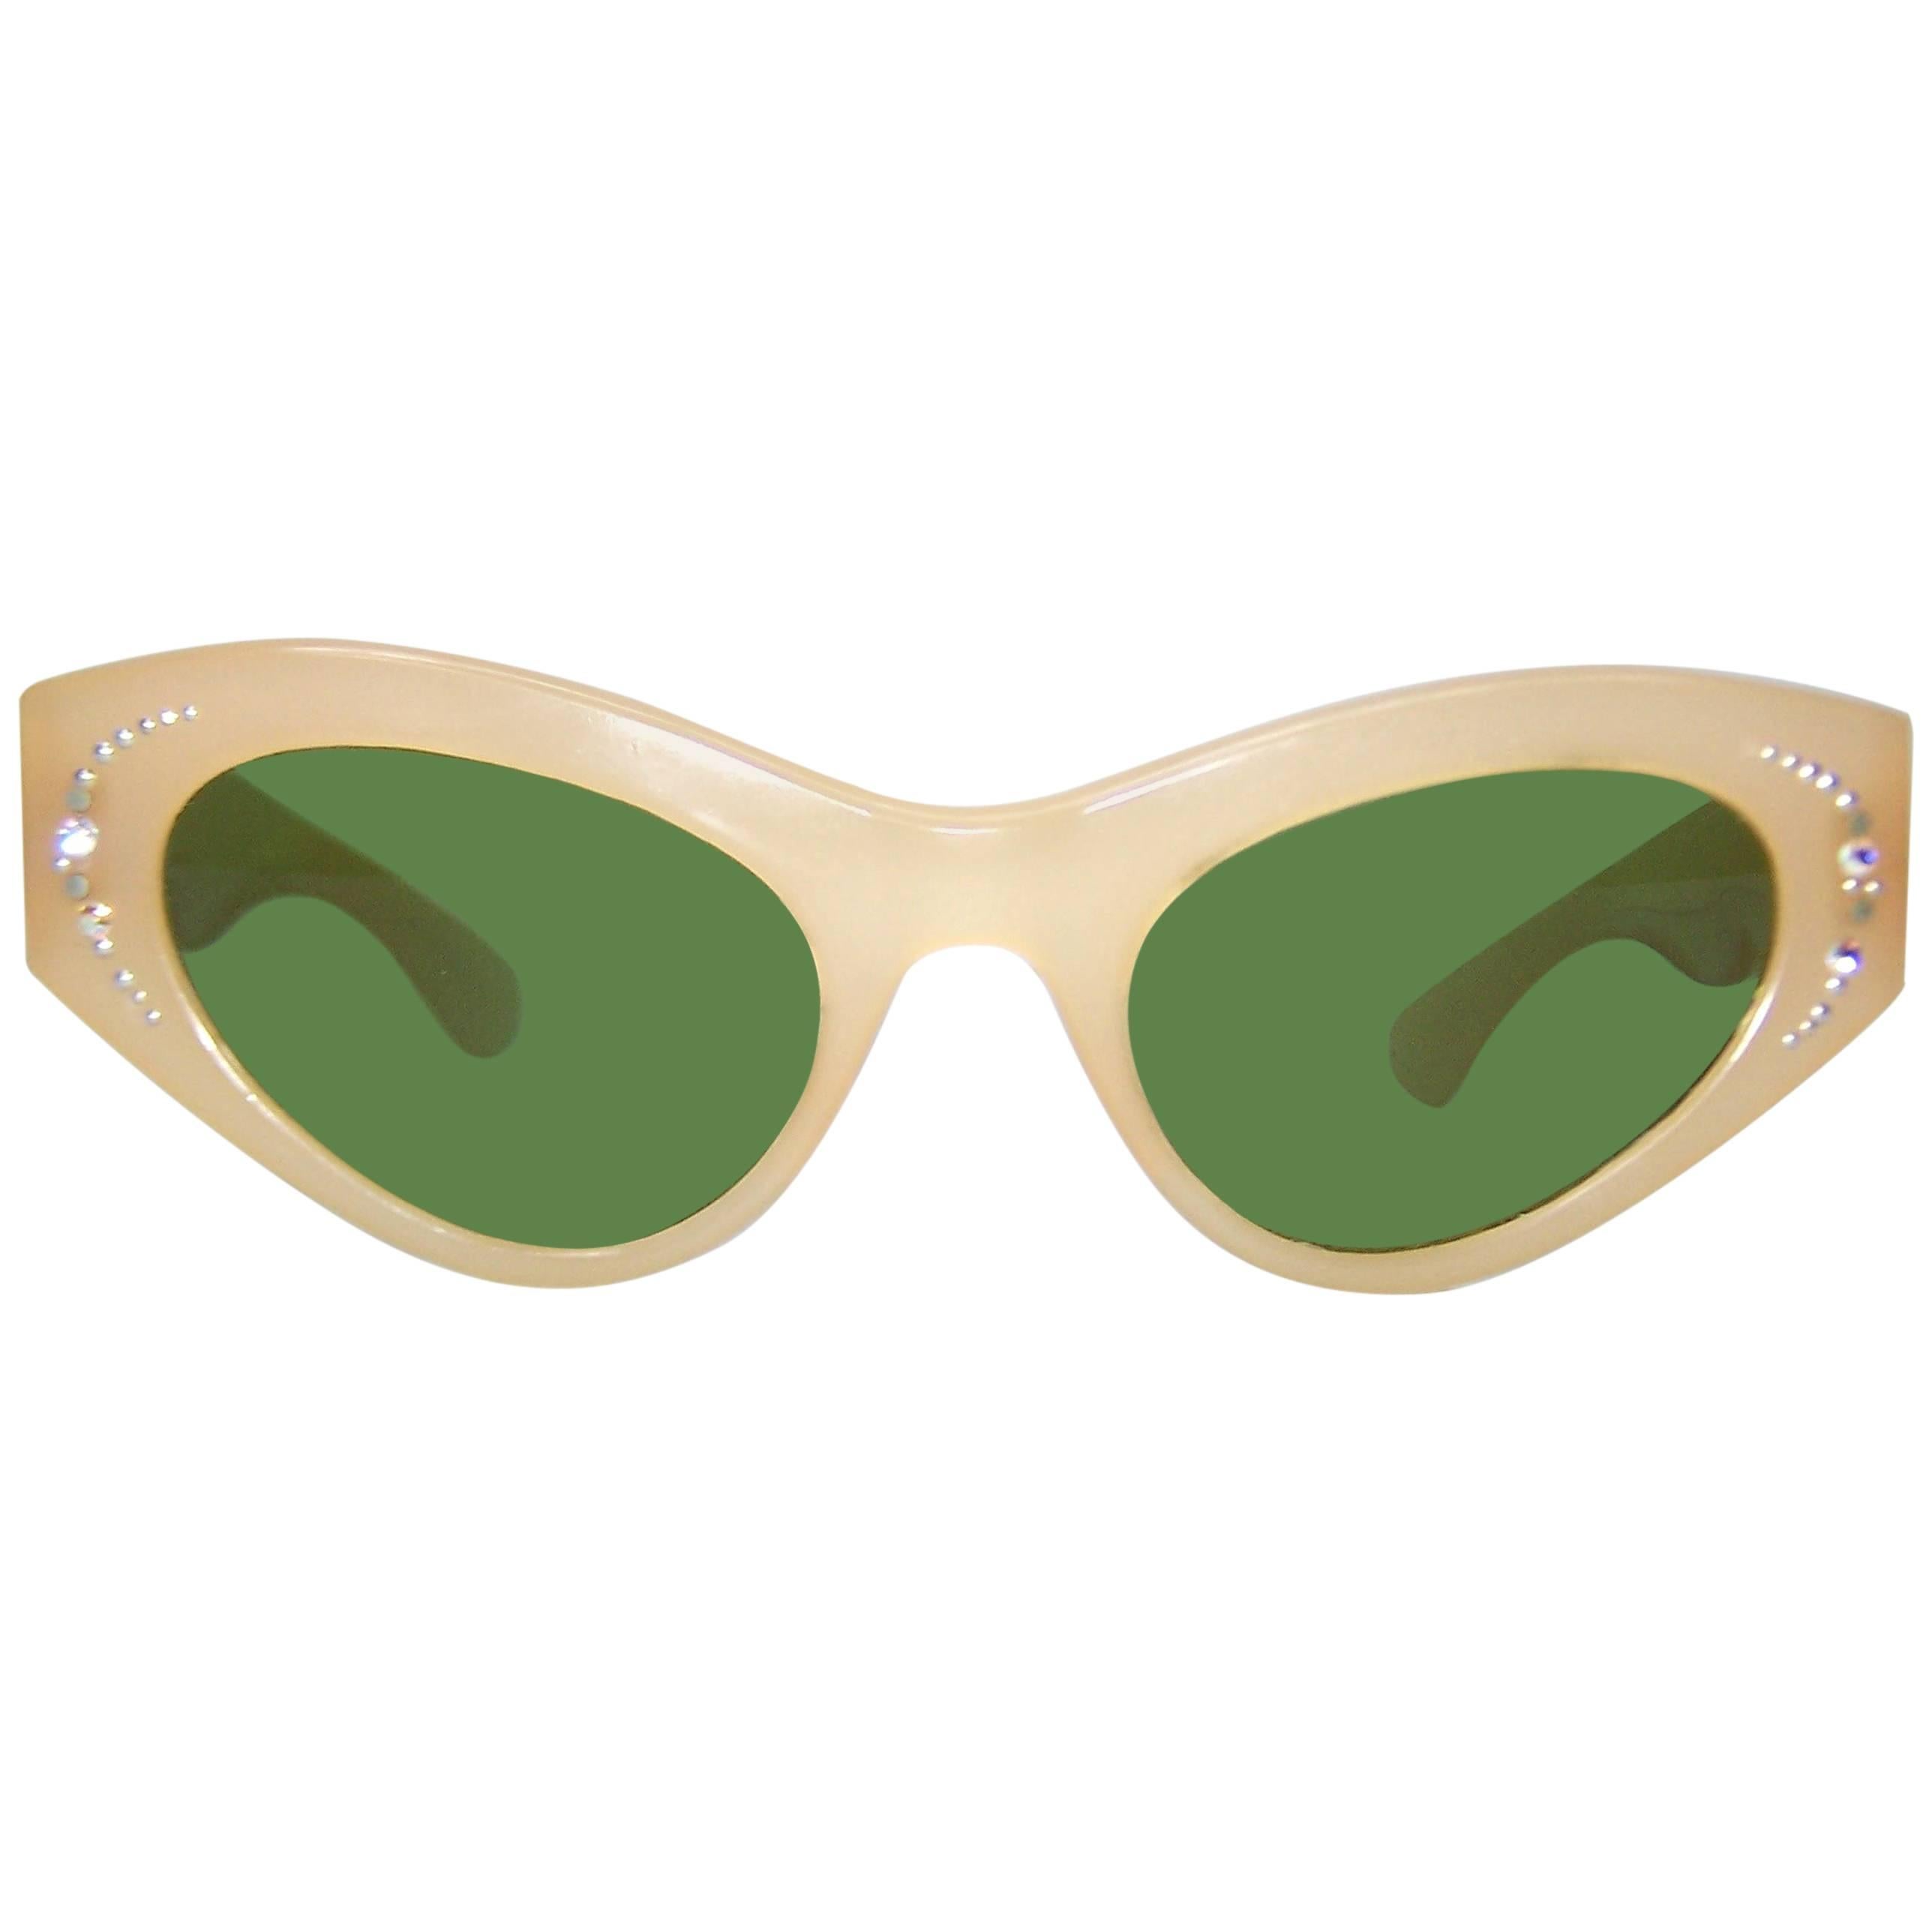 1950's Italian Blonde Cat Eye Sunglasses With Green Lenses